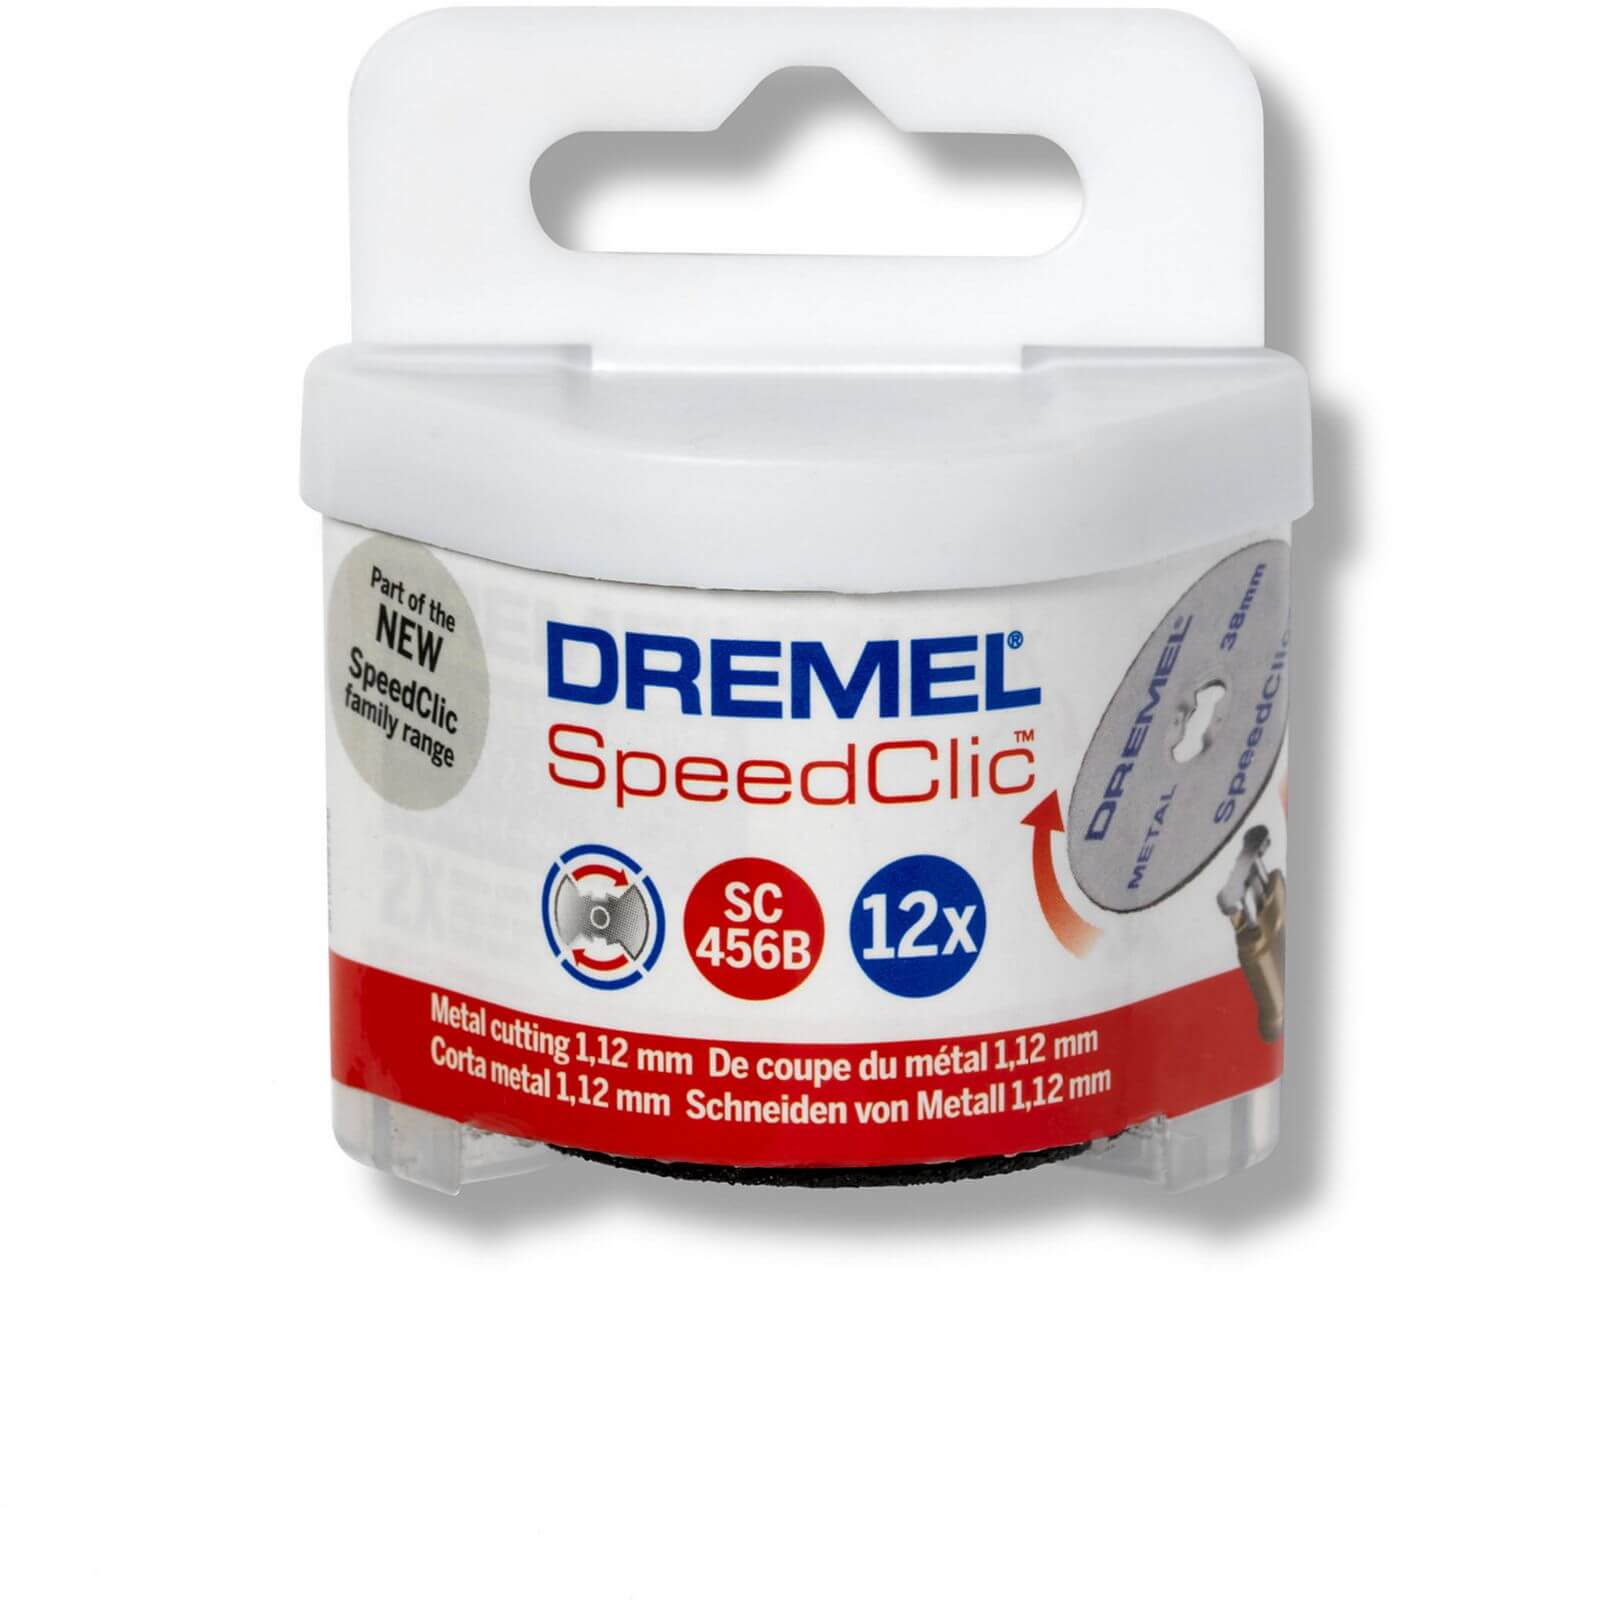 Dremel SpeedClic Metal Cut Wheel 12 Pack